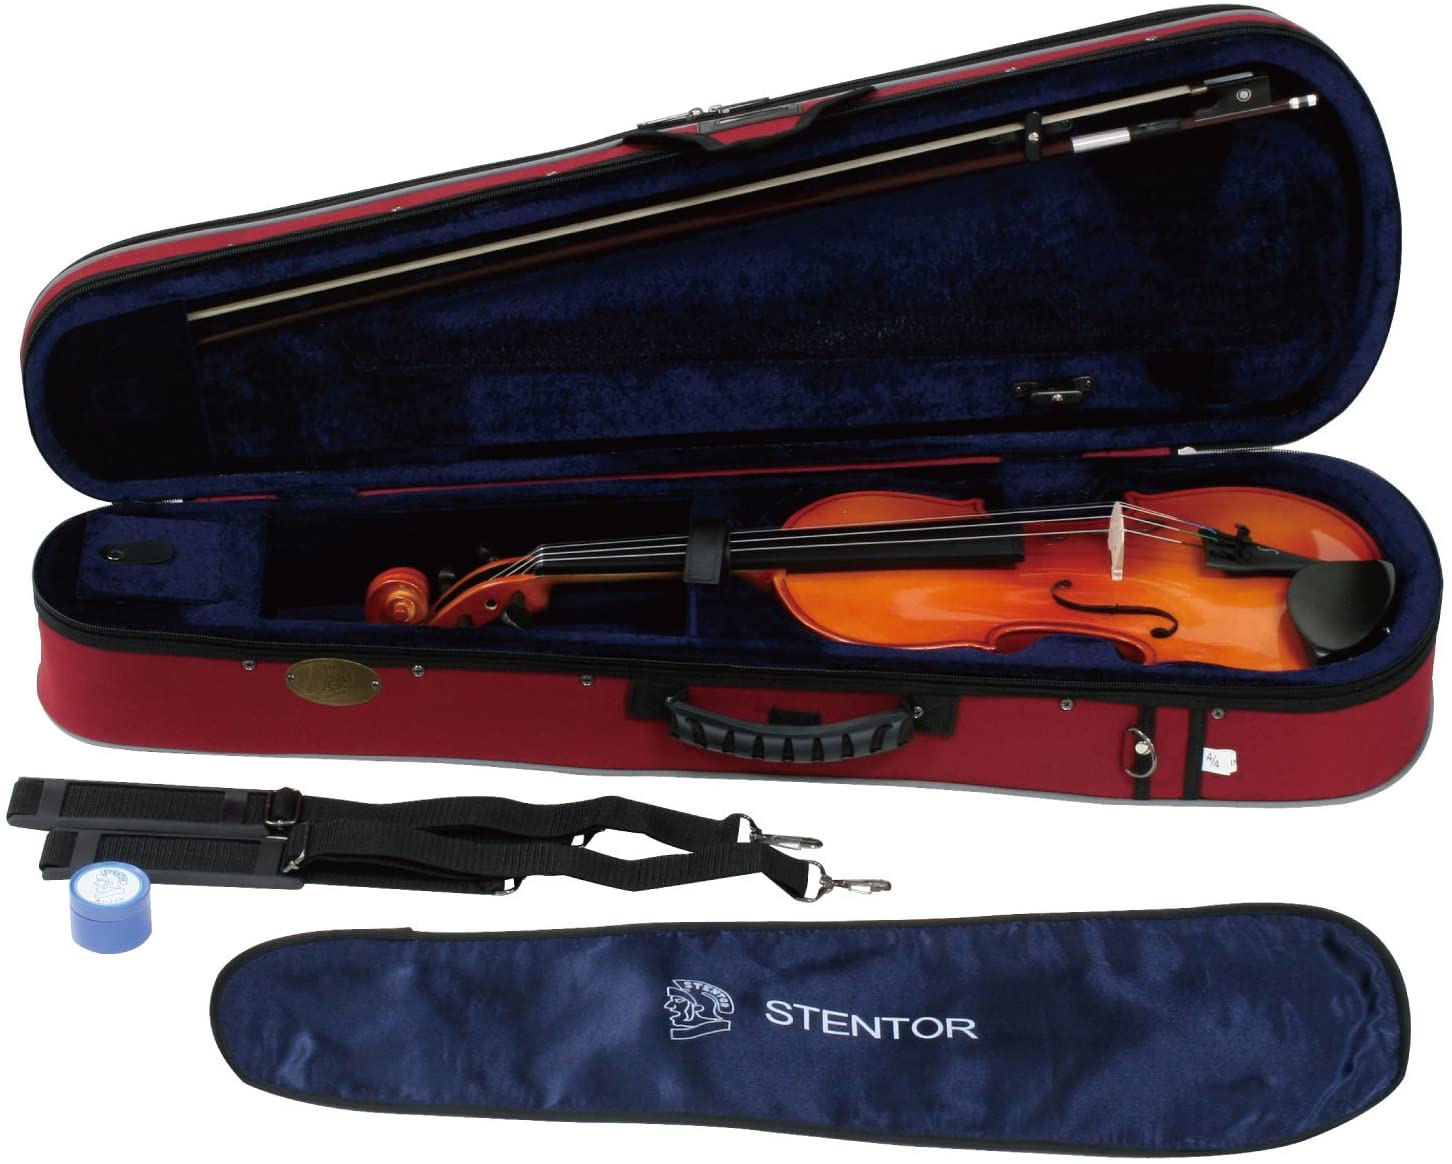 2. Stentor Student II 4-String Violin